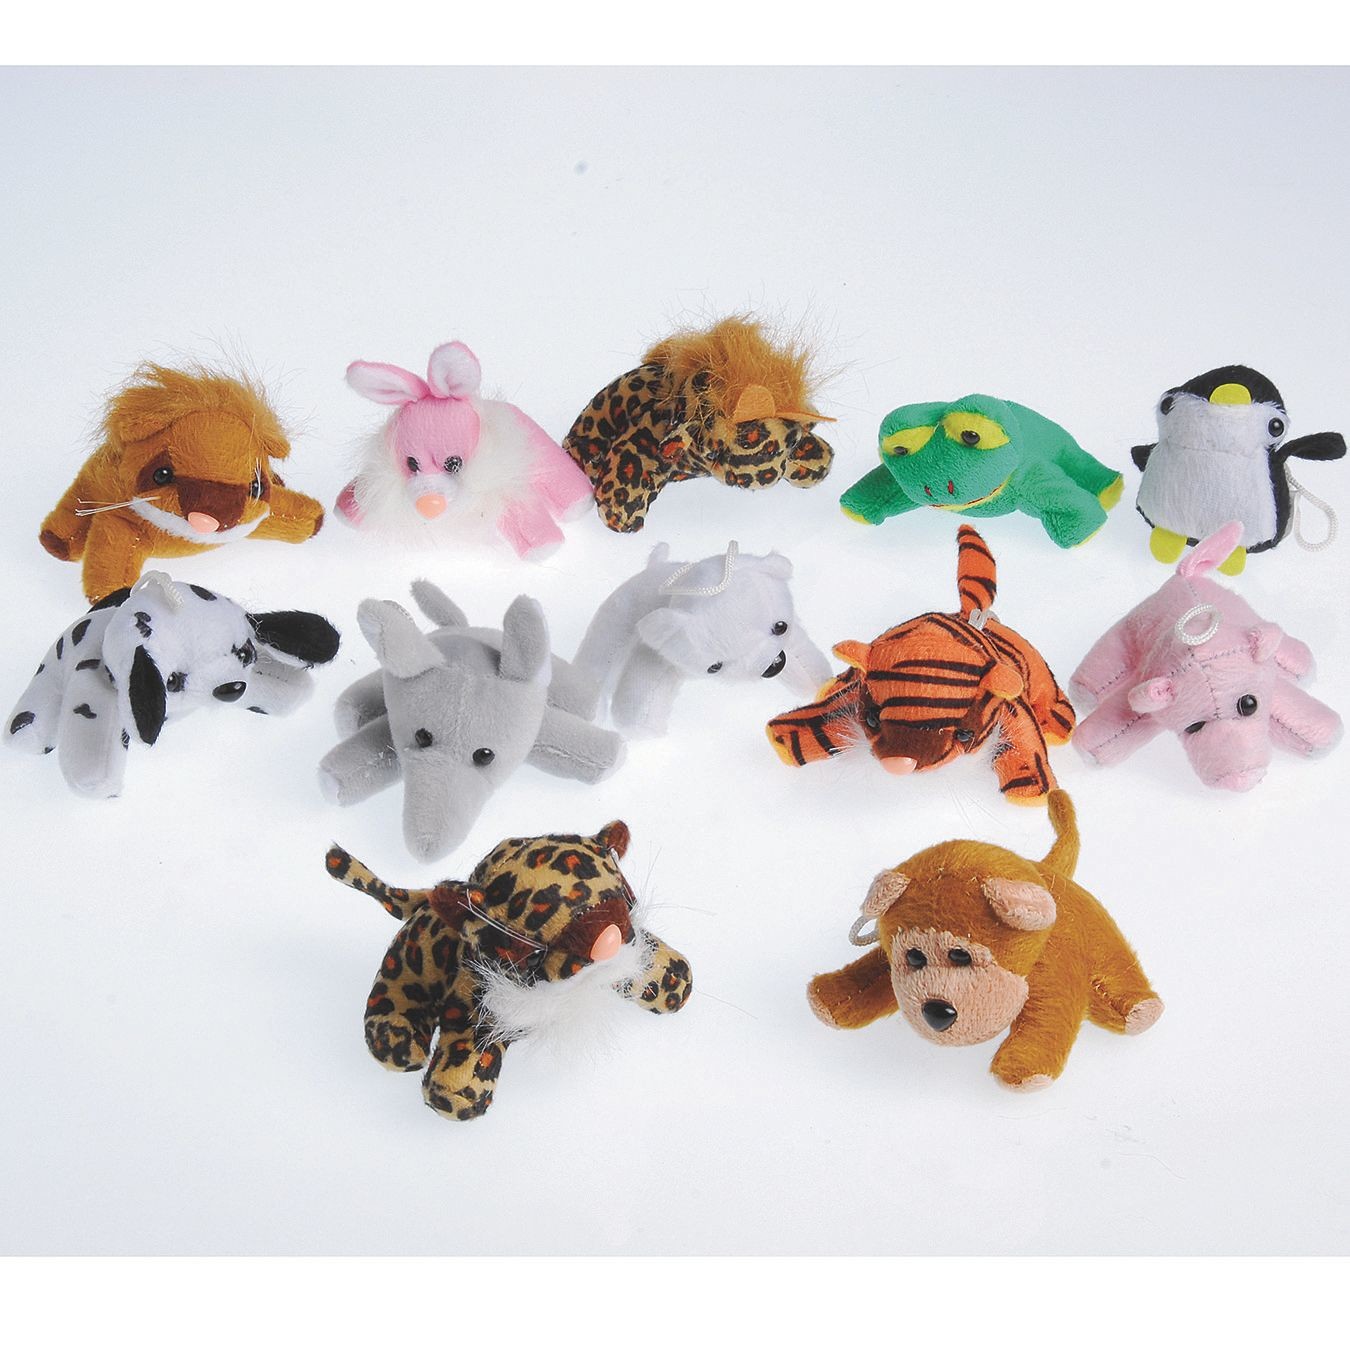 Buy Small Plush Sitting Stuffed Animal Assortment (Pack of 12) at S&S  Worldwide